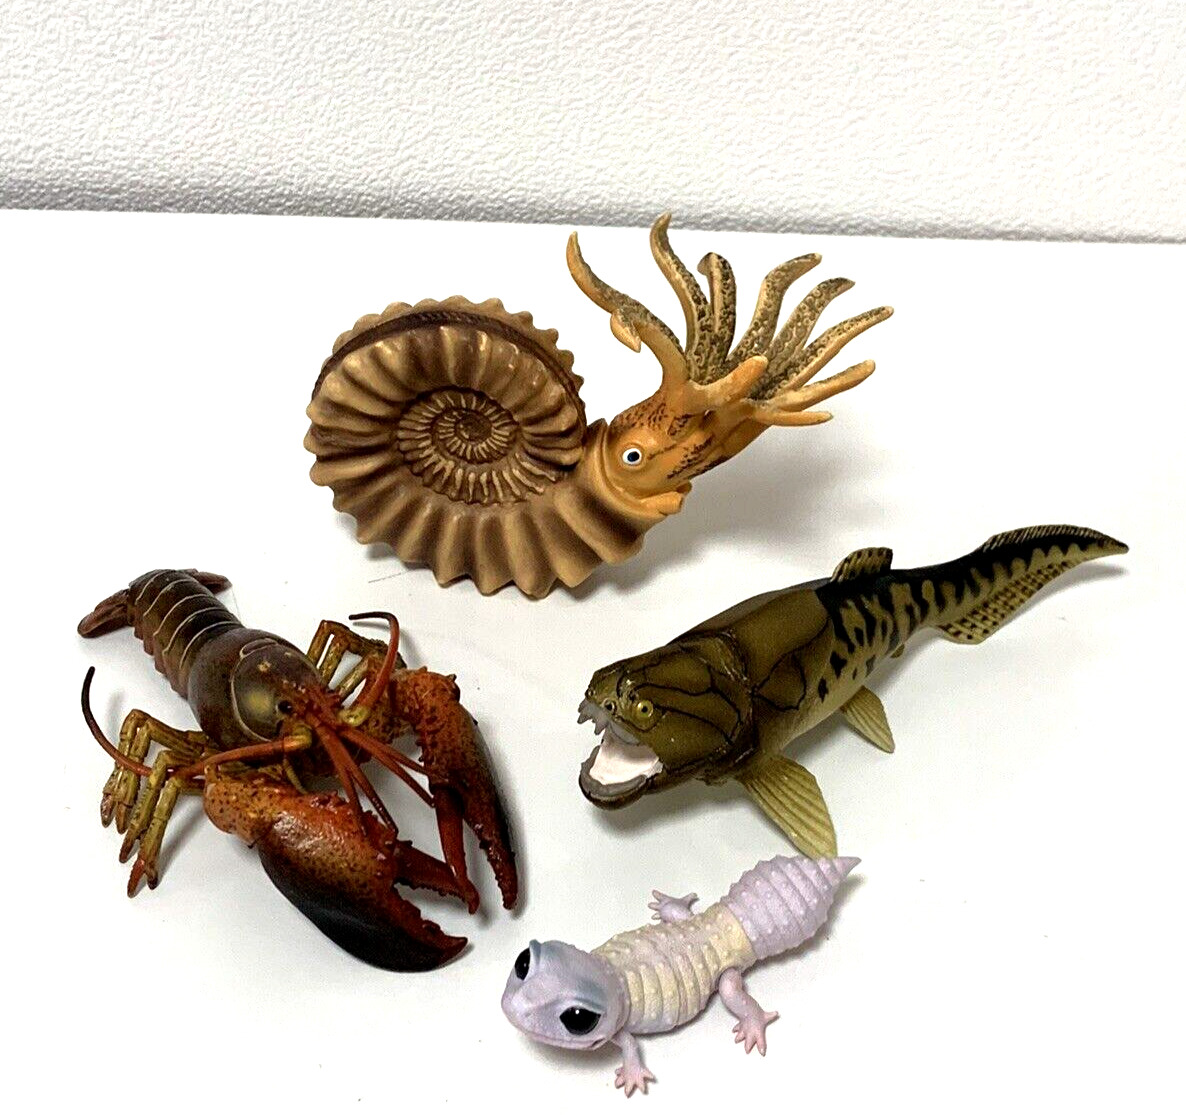 Replica Figure Fish Sea Creatures Toy Set of 4 Creatures